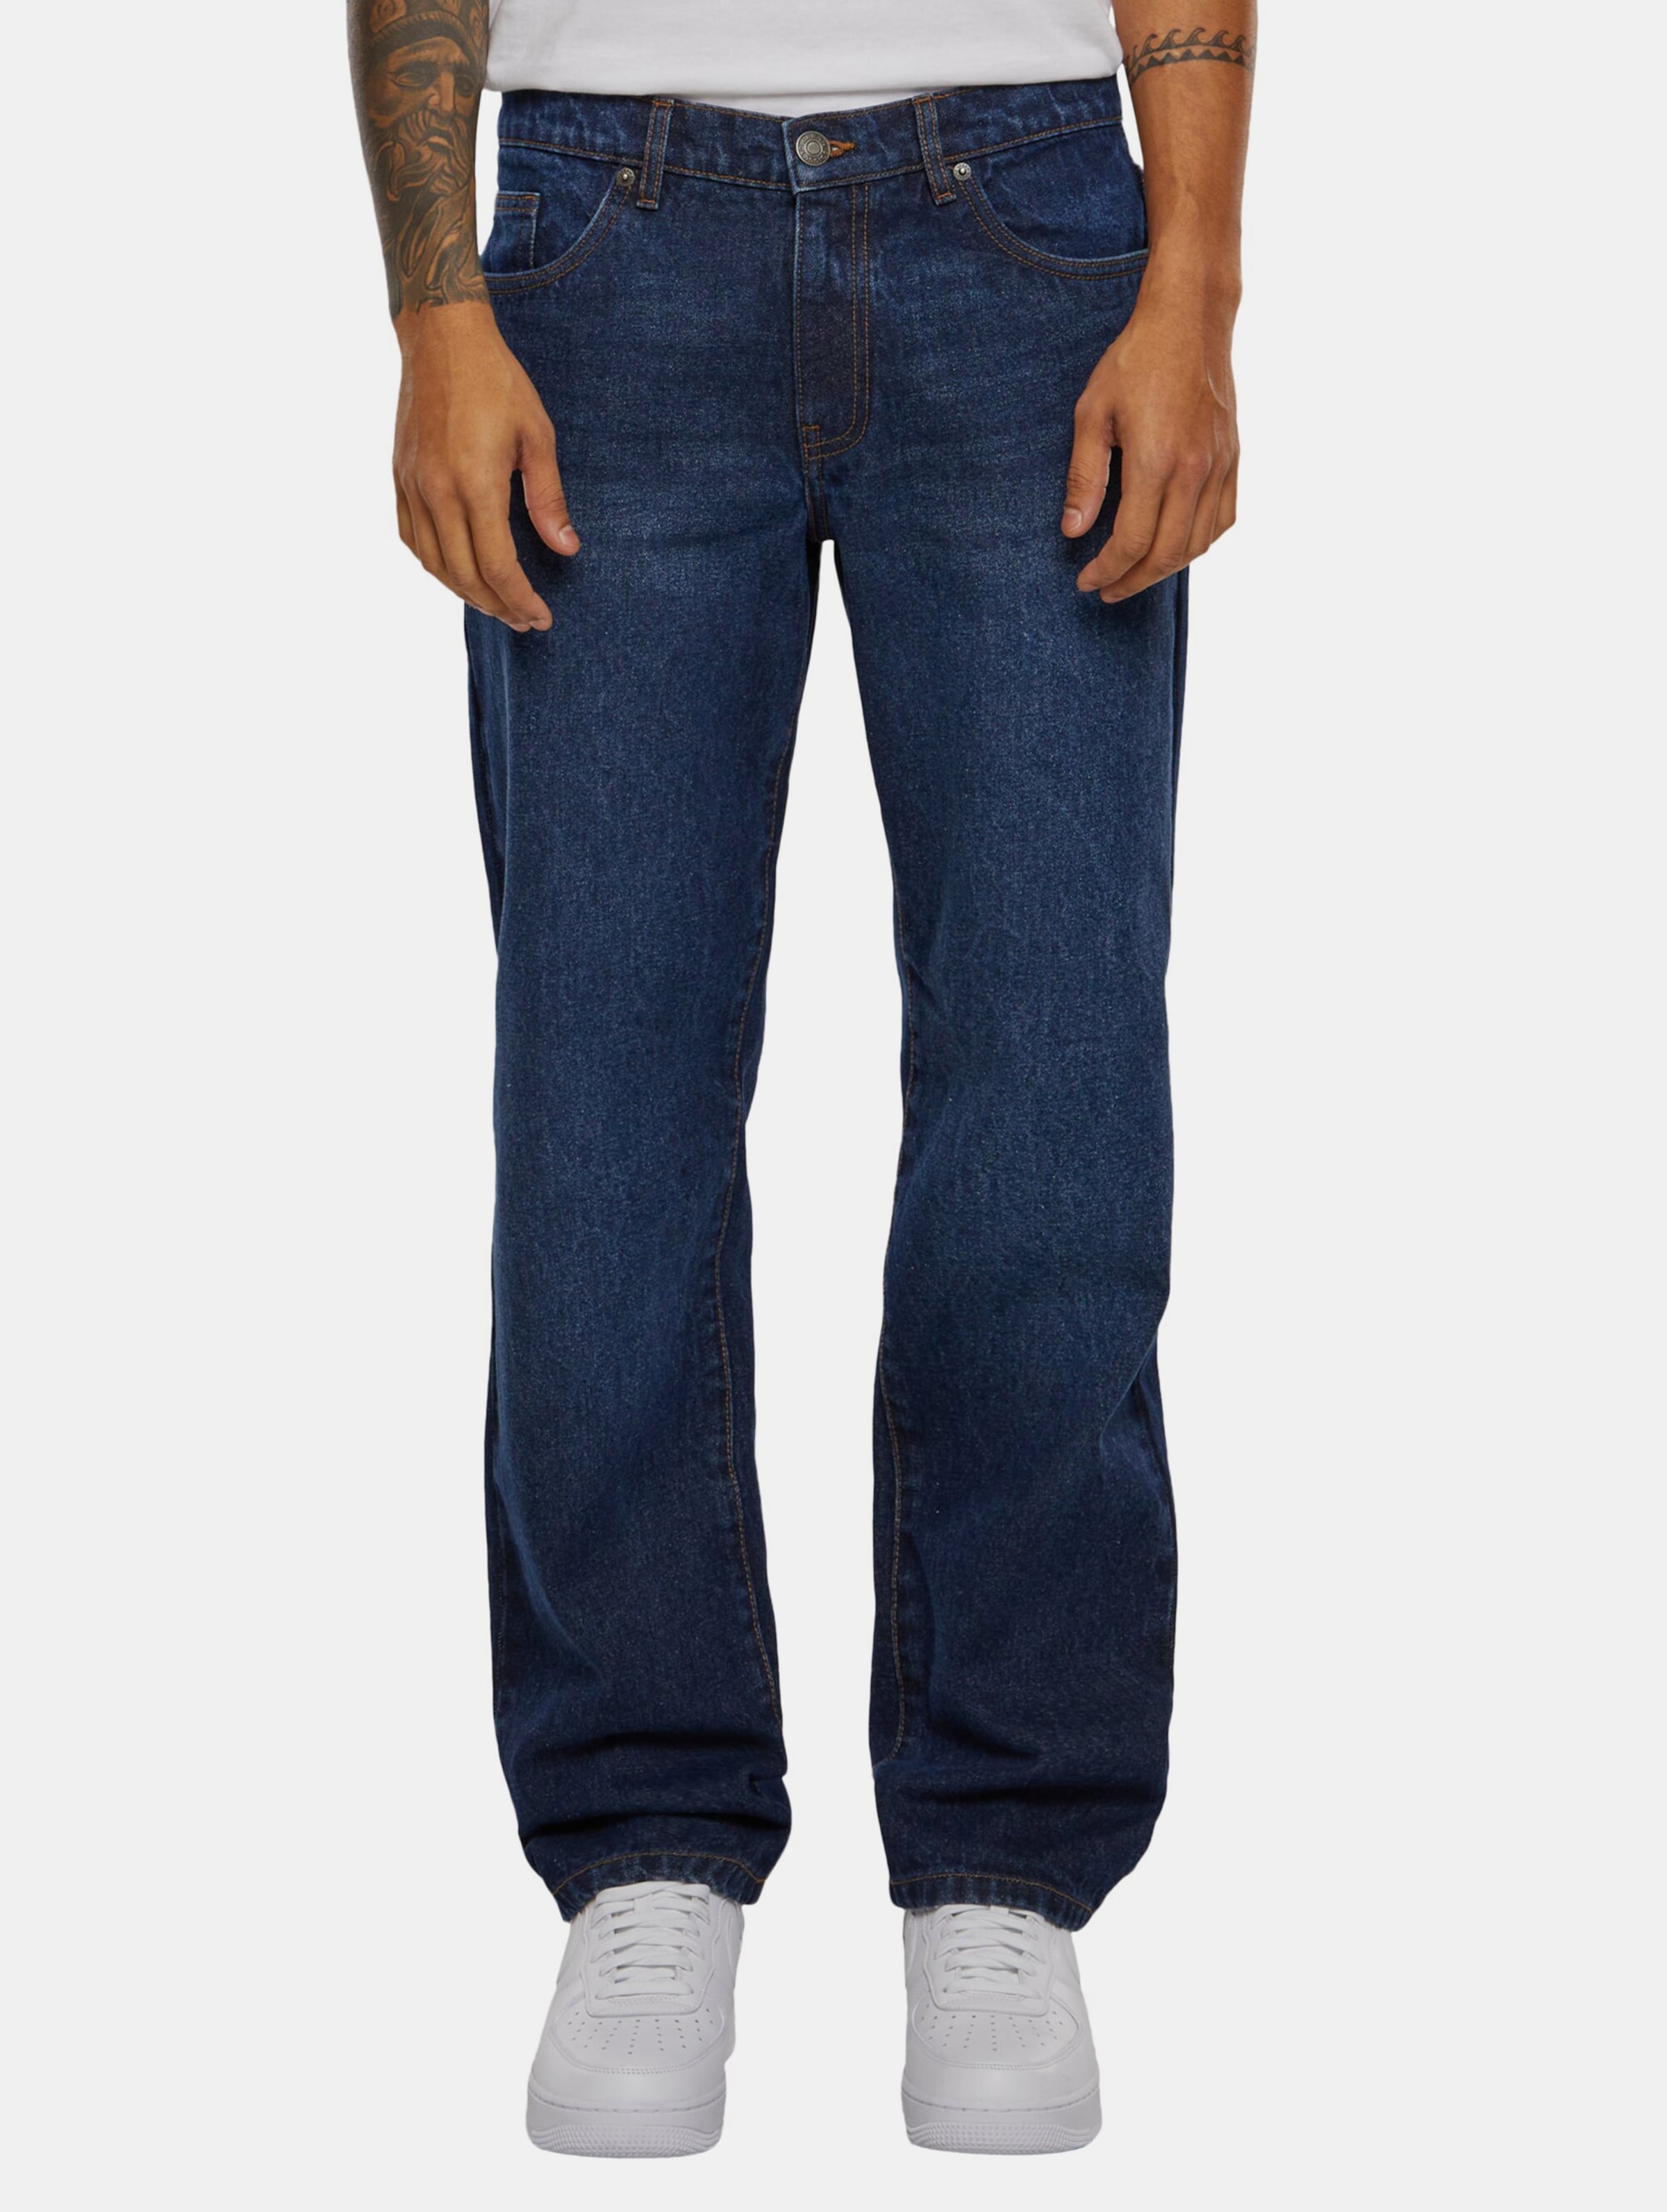 Urban Classics - Heavy Ounce Jeans Broek rechte pijpen - Taille, 32 inch - Blauw